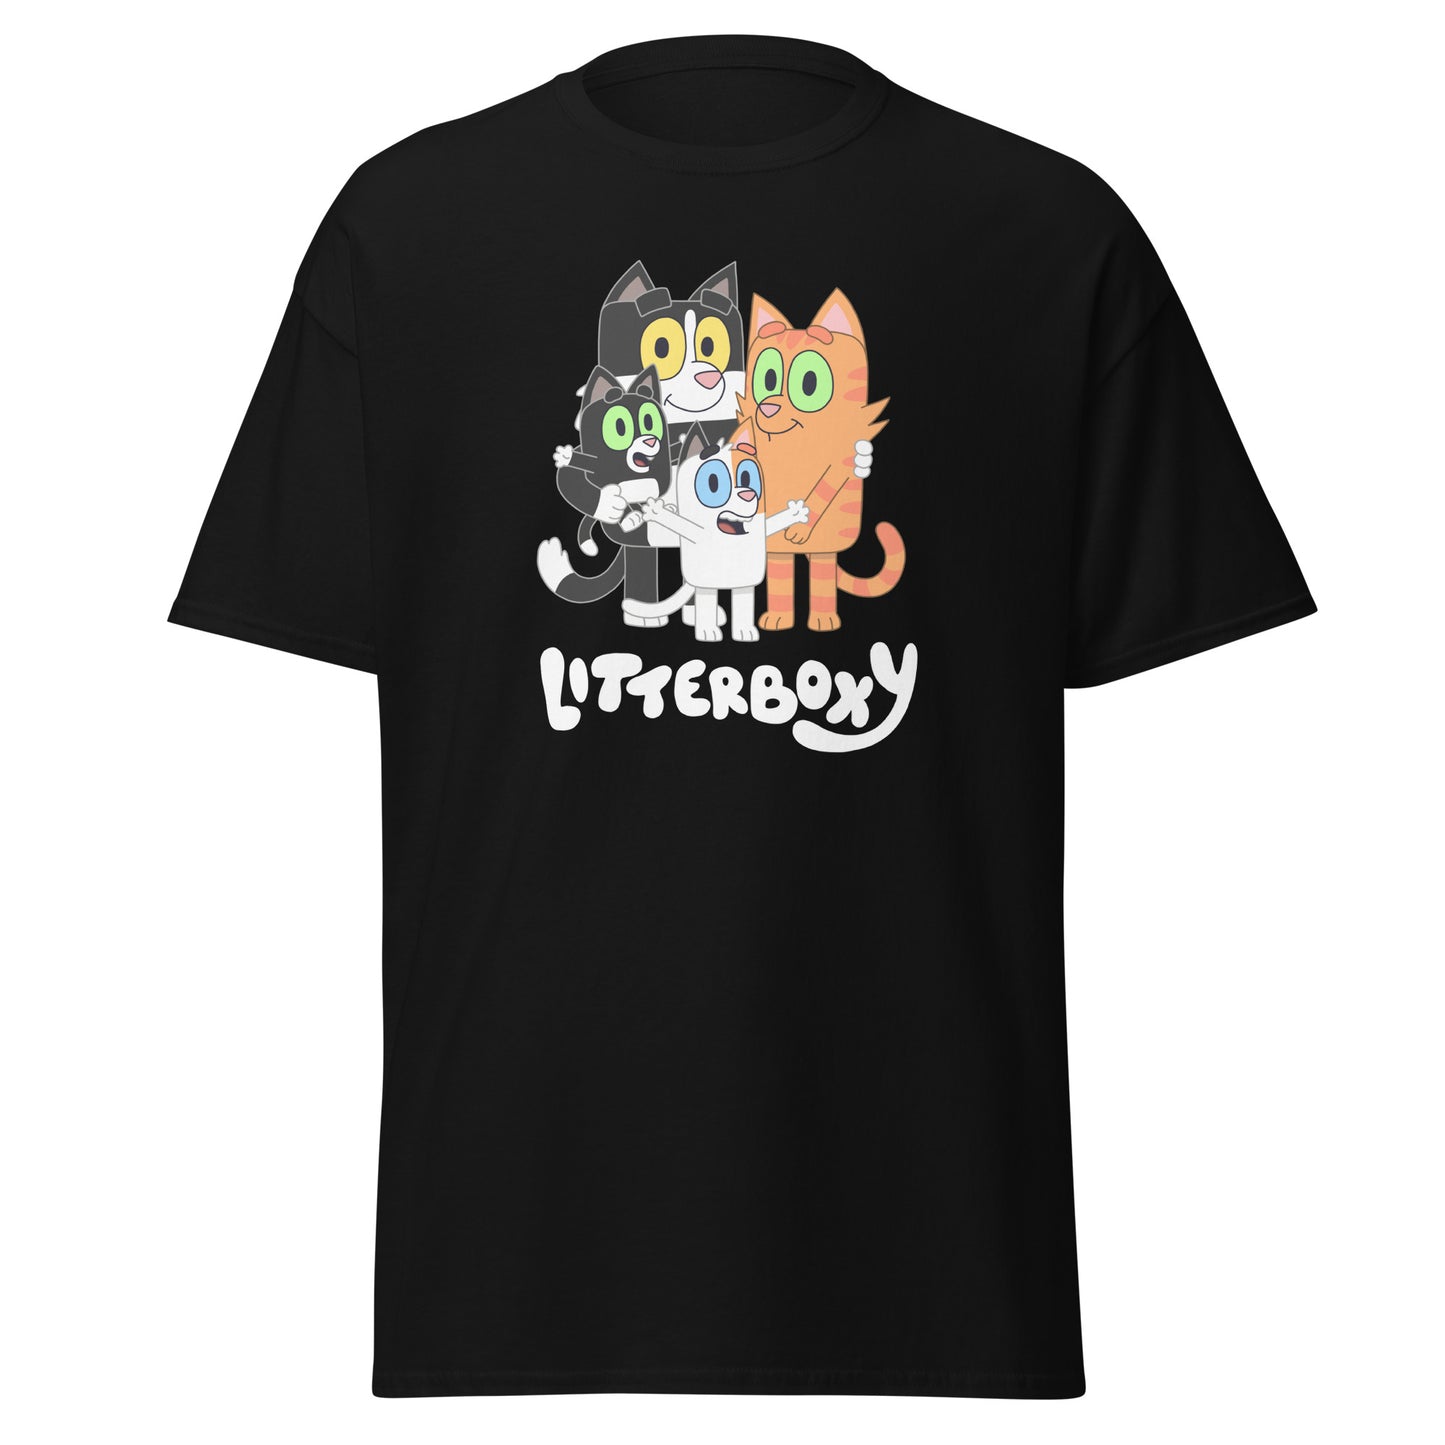 Litterboxy Family Men's T-Shirt